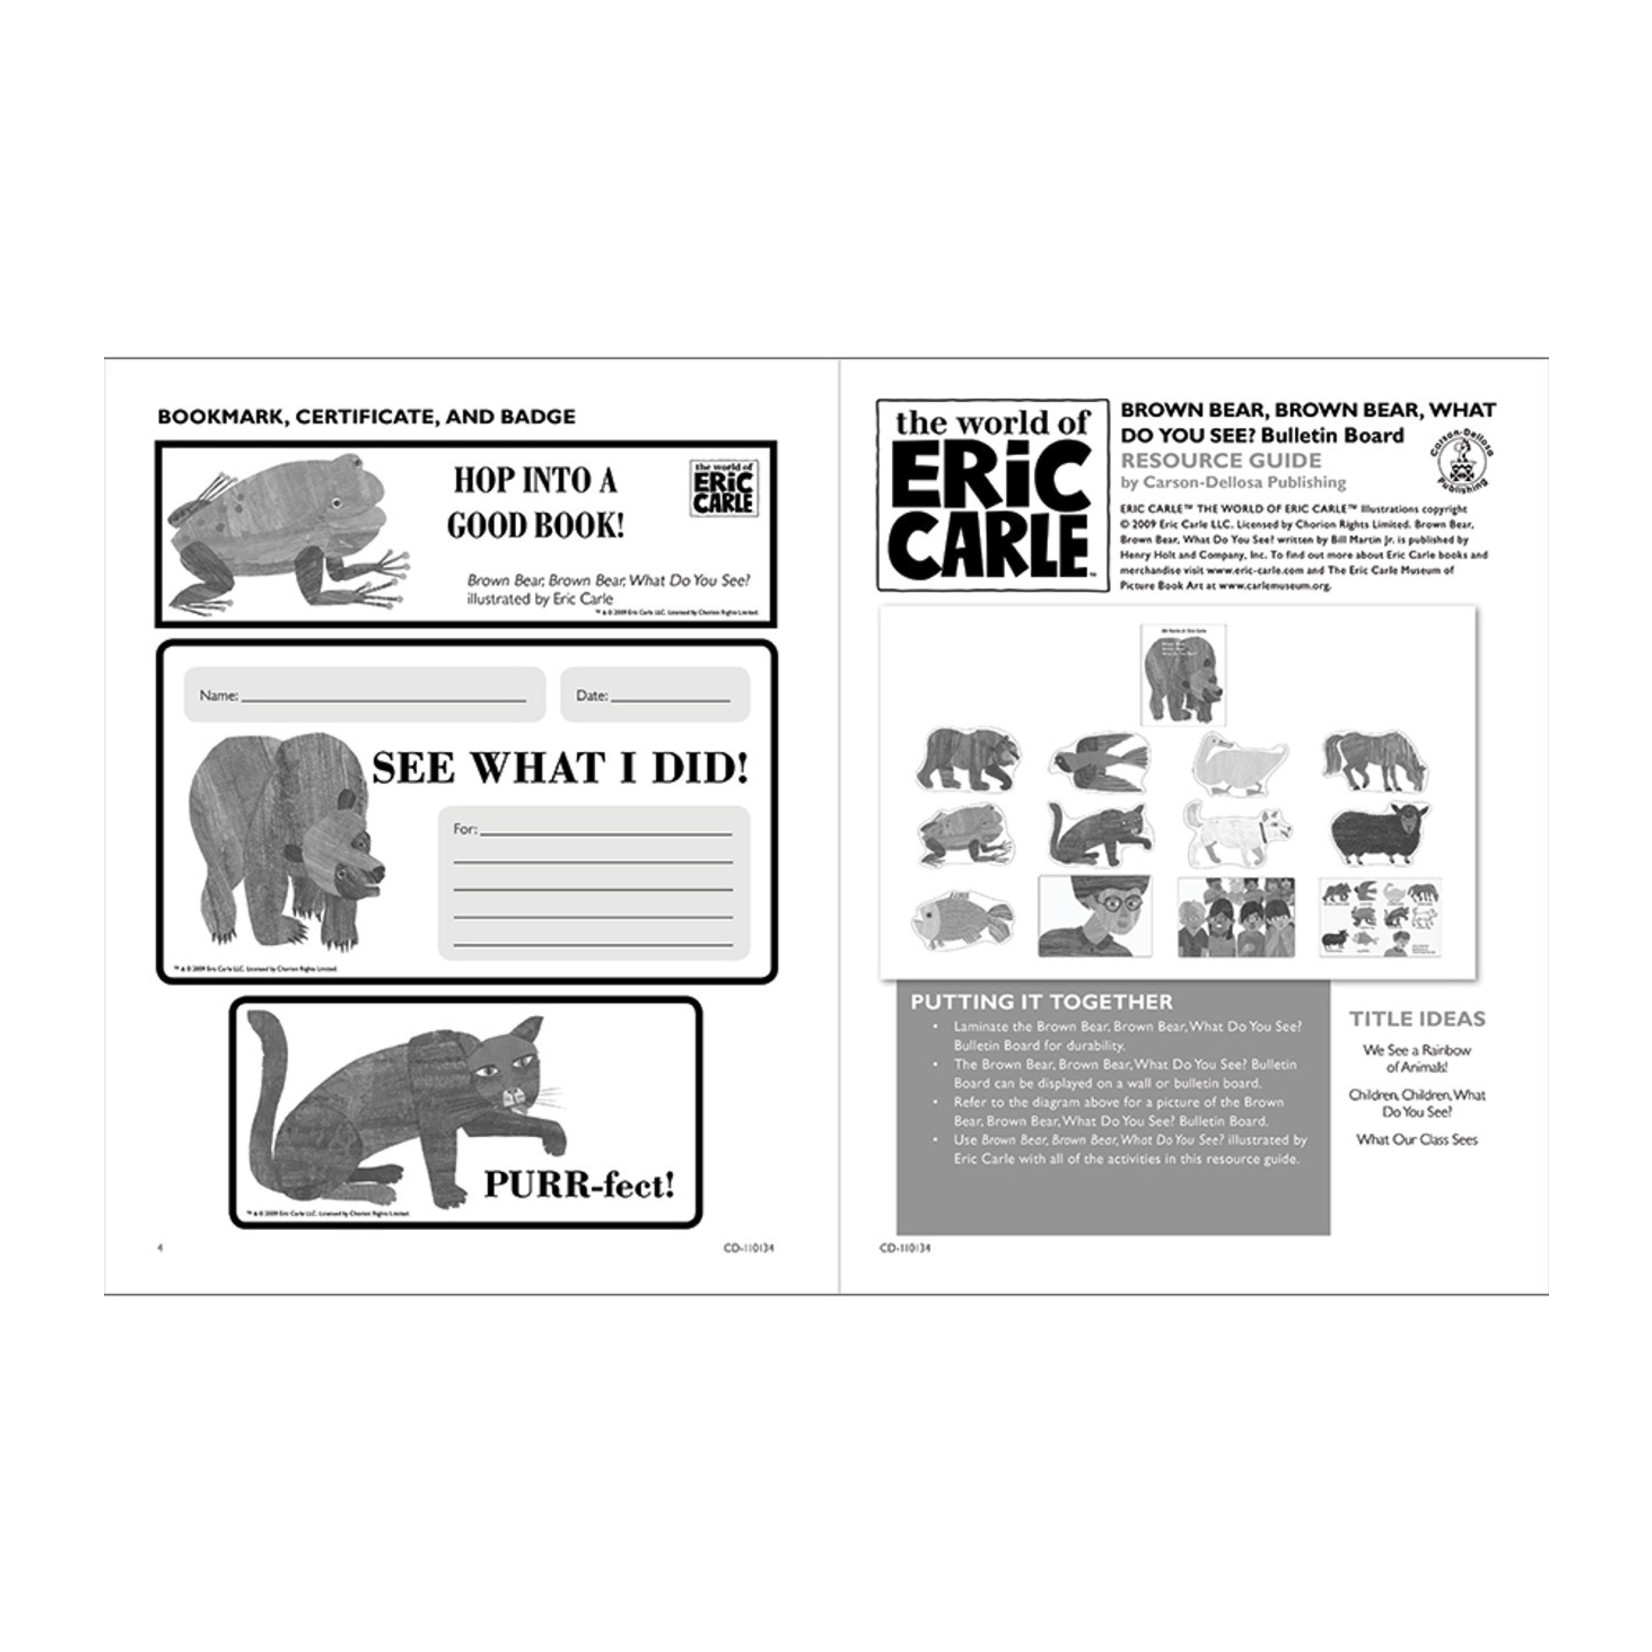 CARSON DELLOSA PUBLISHING CO Brown Bear, Brown Bear, What Do You See? Bulletin Board Set Grade PK-3